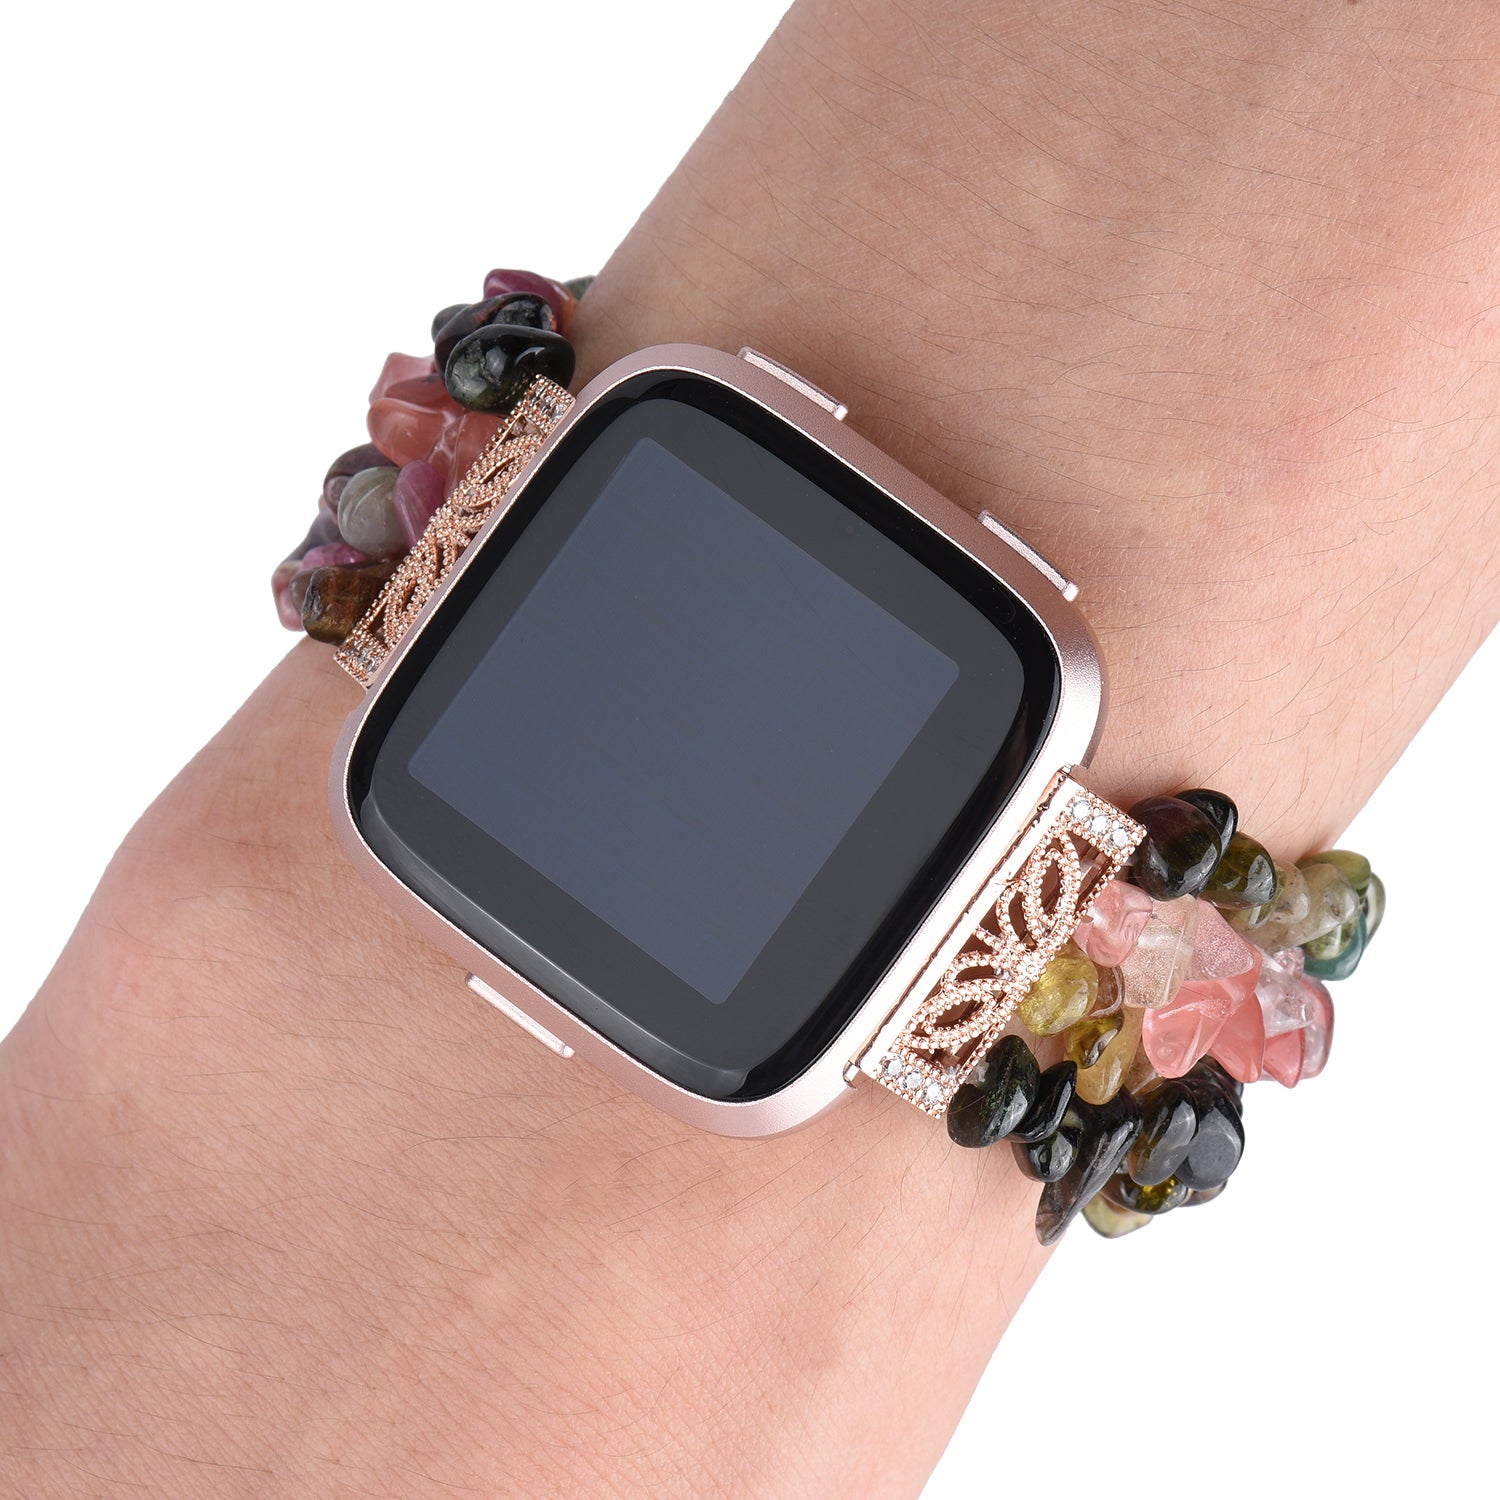 Four Rows Natural Stones Watch Band Strap Wrist Bracelet for Fitbit Versa/Fitbit Versa 2 - Multi-color